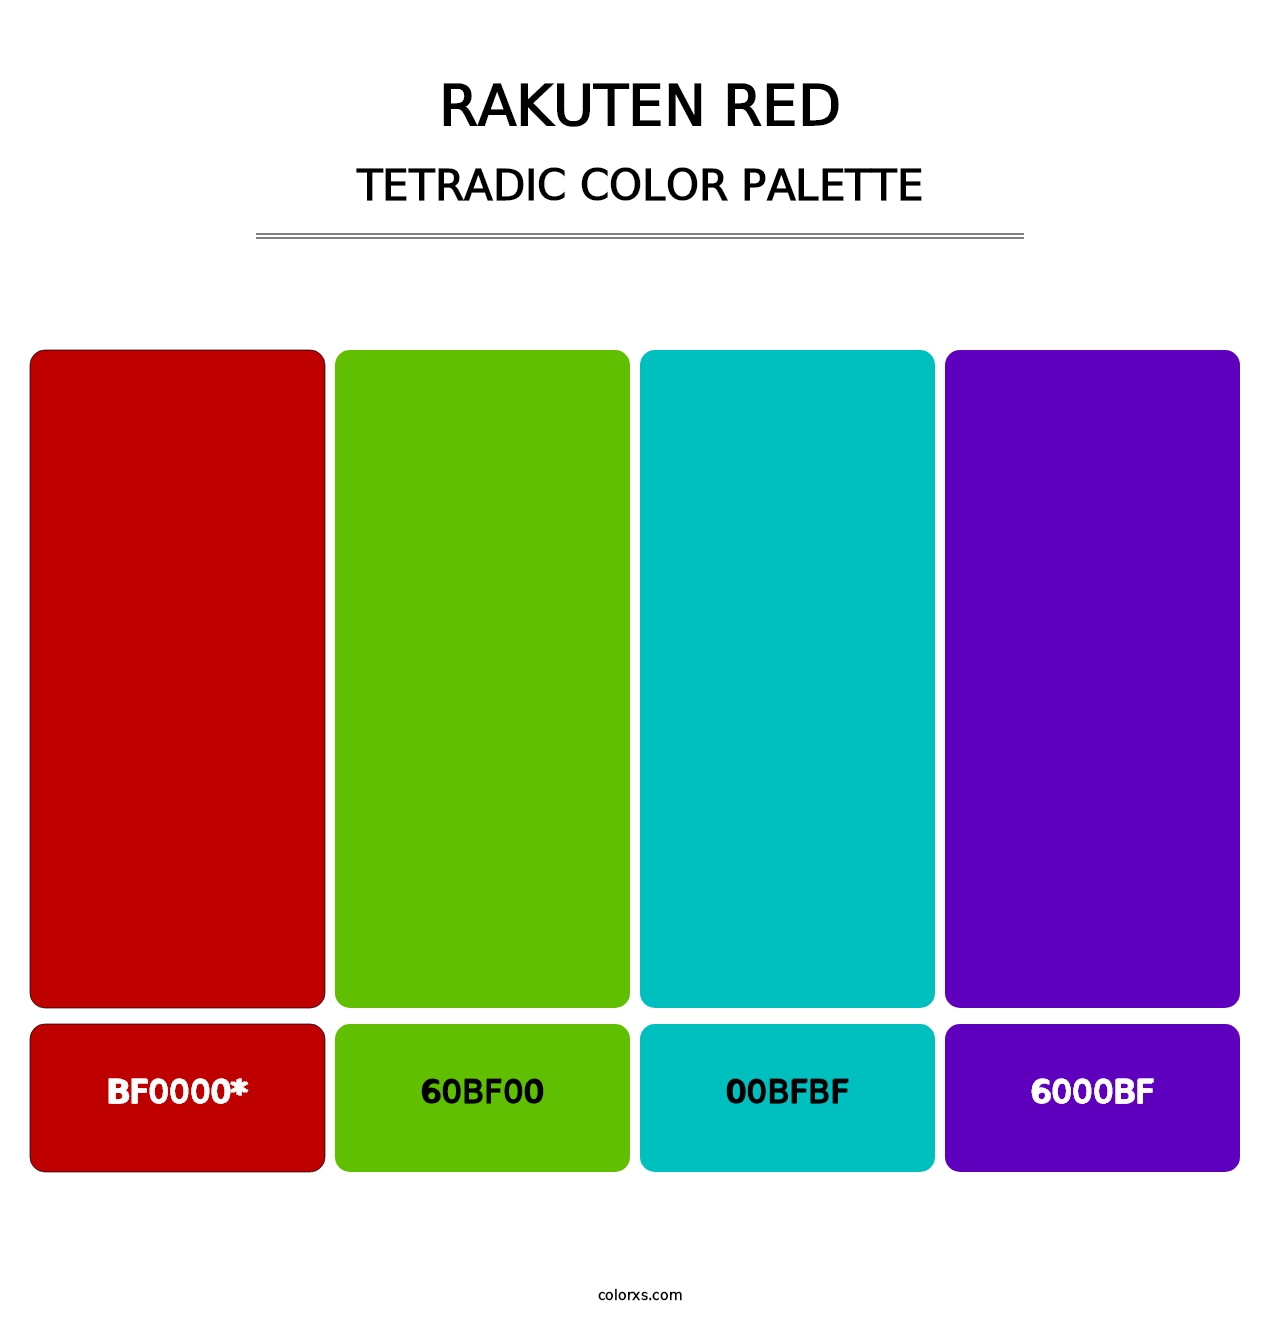 Rakuten Red - Tetradic Color Palette